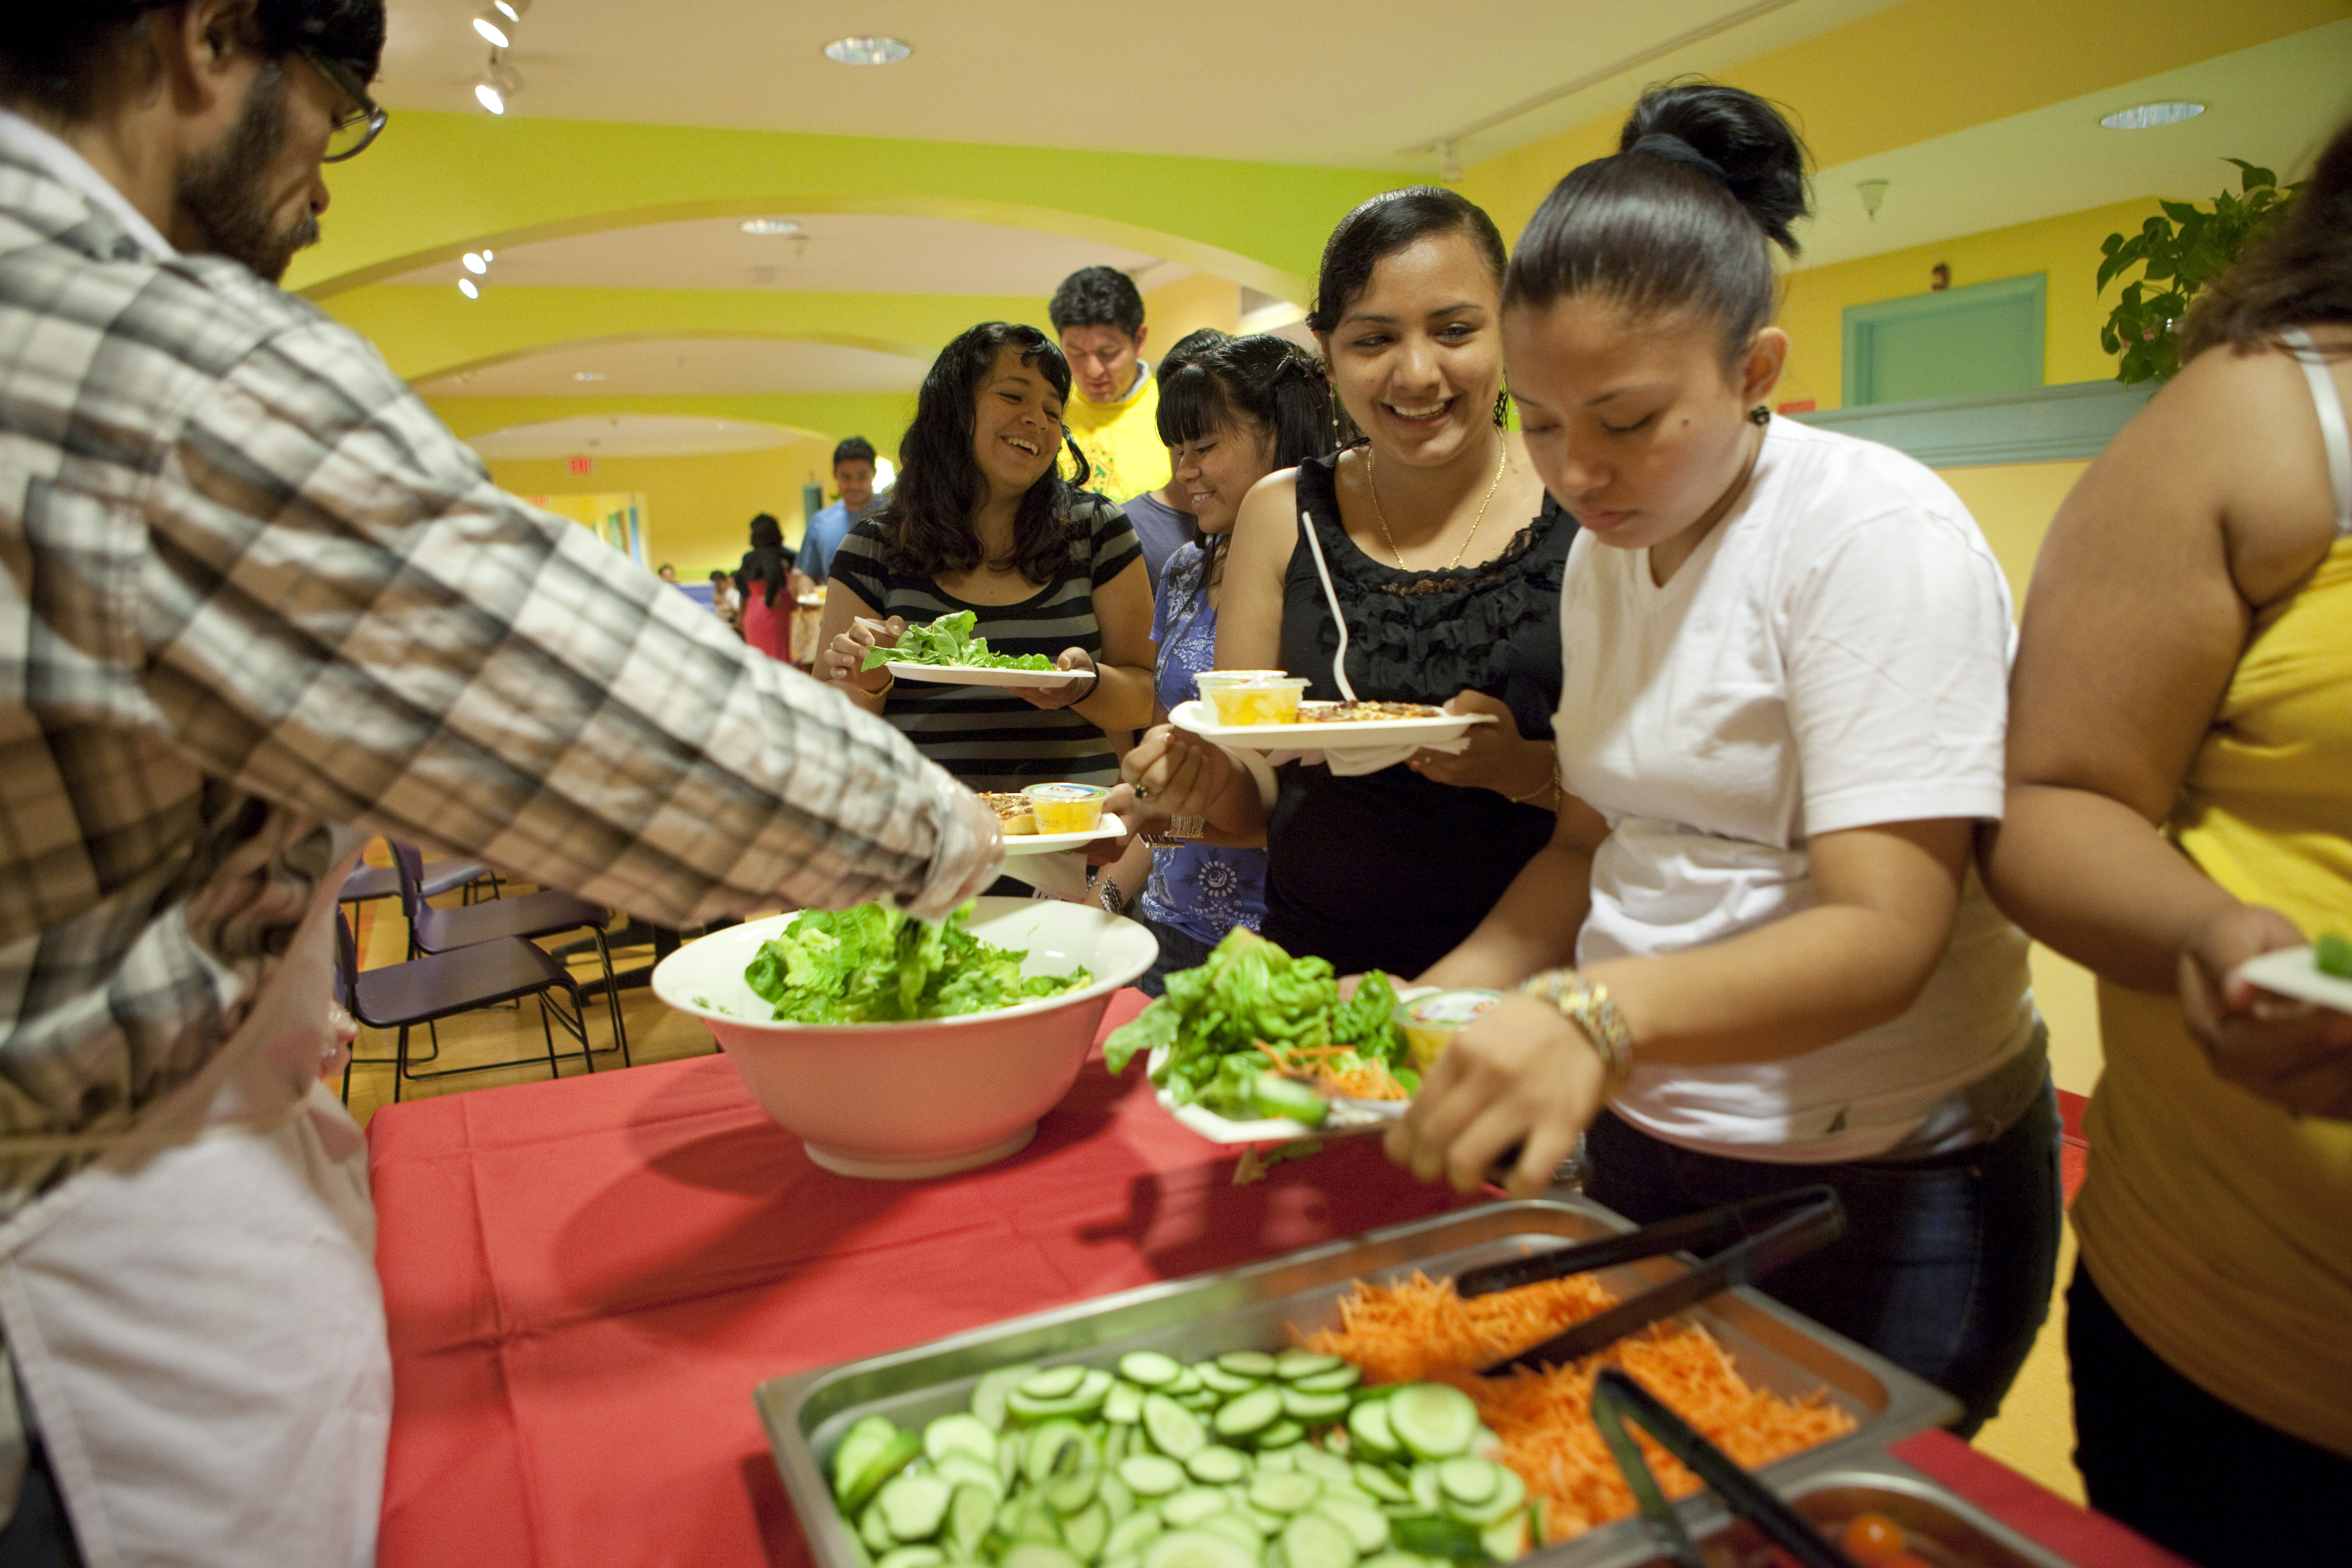 DC Central Kitchen serves lunch at Next Step Public Charter School. Photo credit: Ezra Gregg